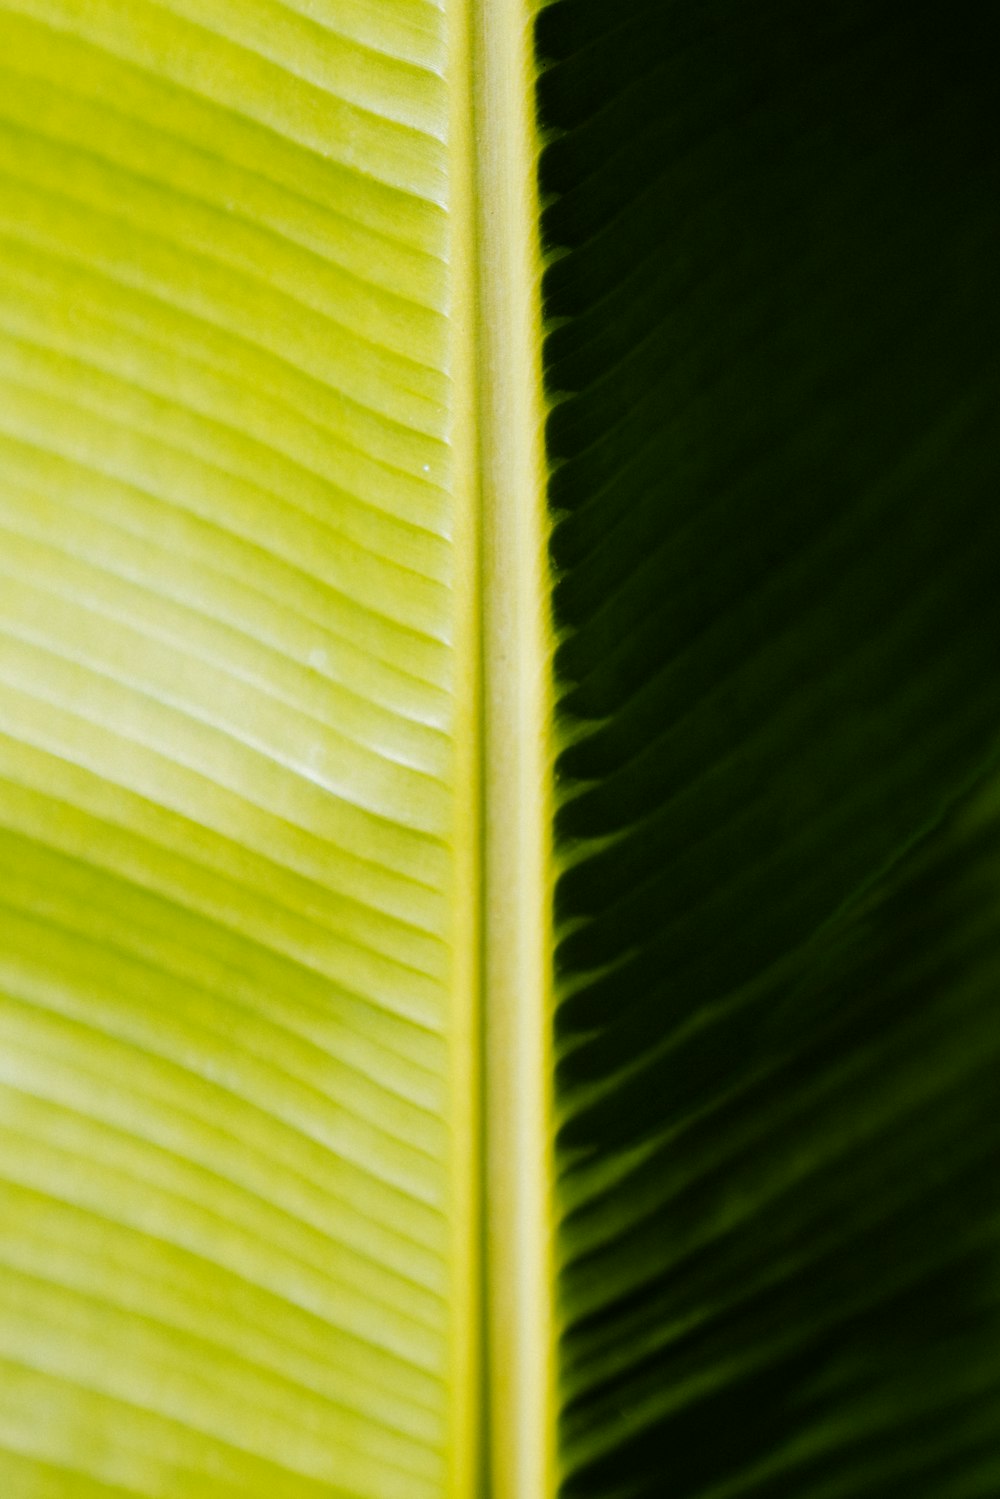 a close up of a green banana leaf